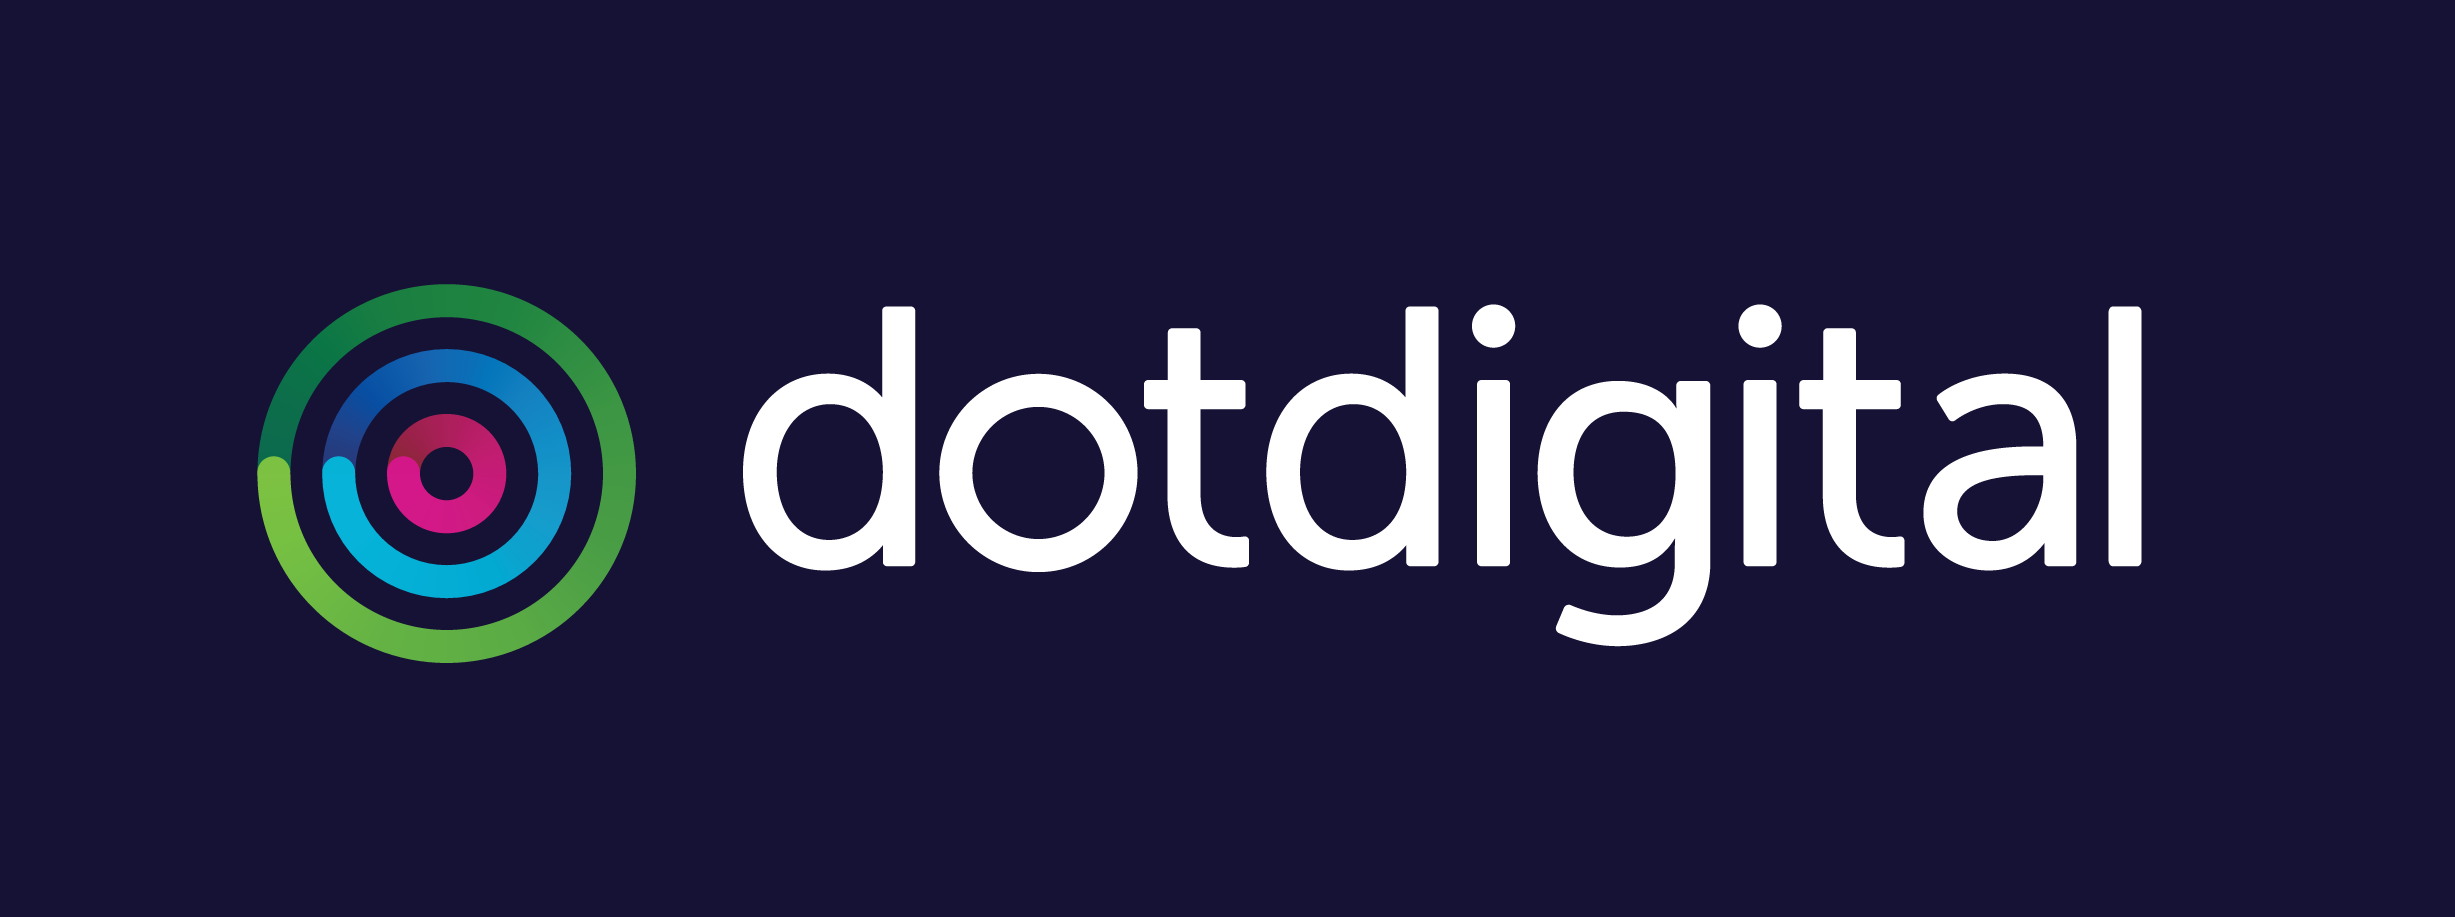 Primary dotdigital logo reversed_RGB.png